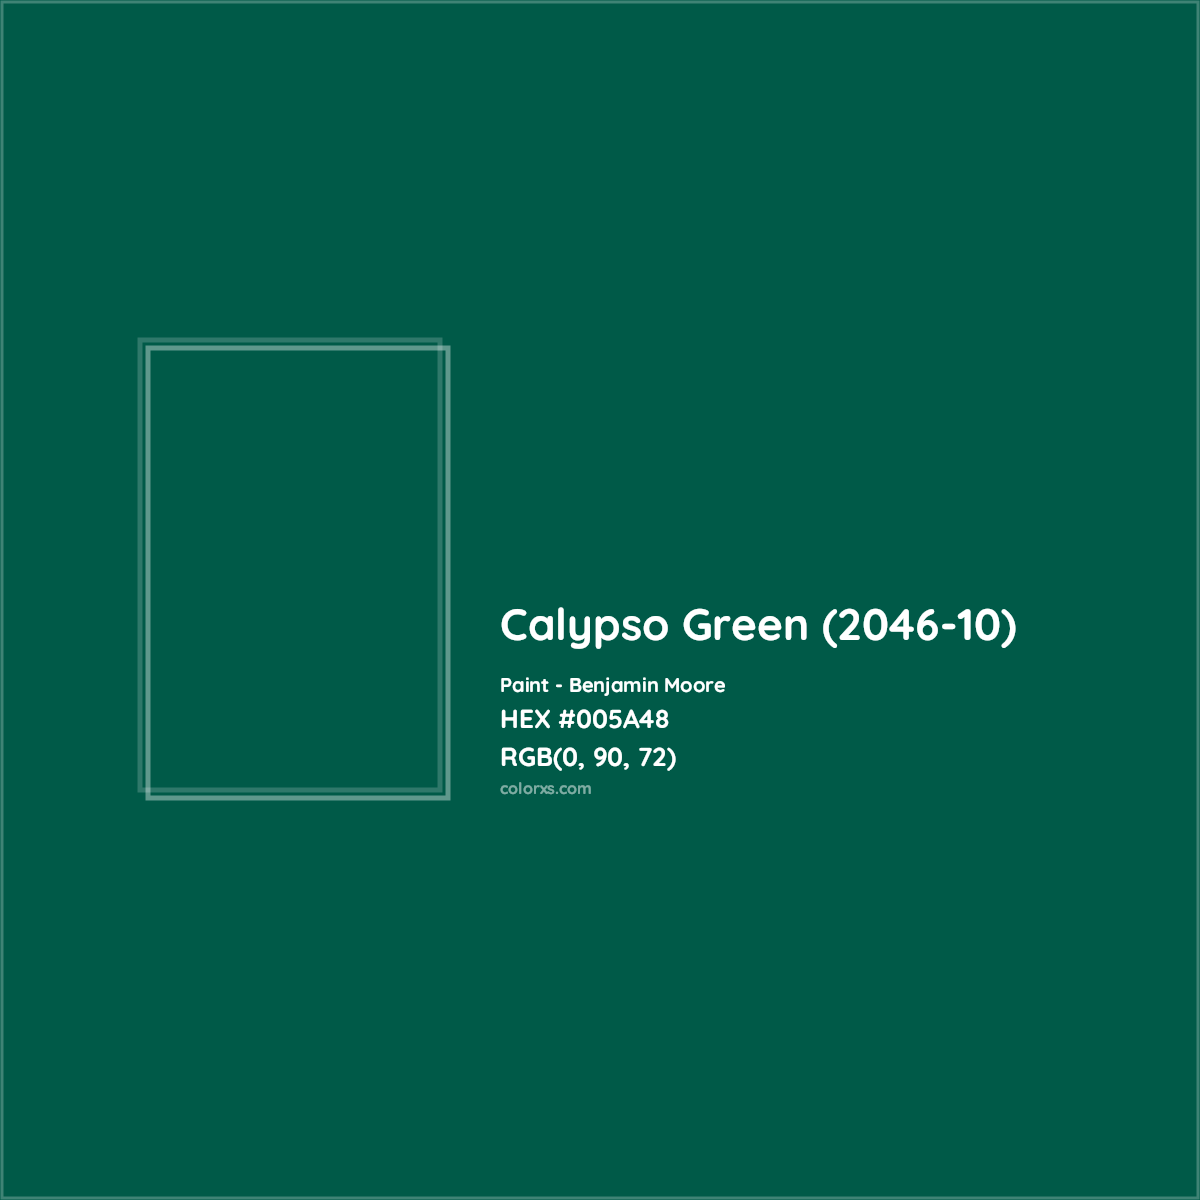 HEX #005A48 Calypso Green (2046-10) Paint Benjamin Moore - Color Code